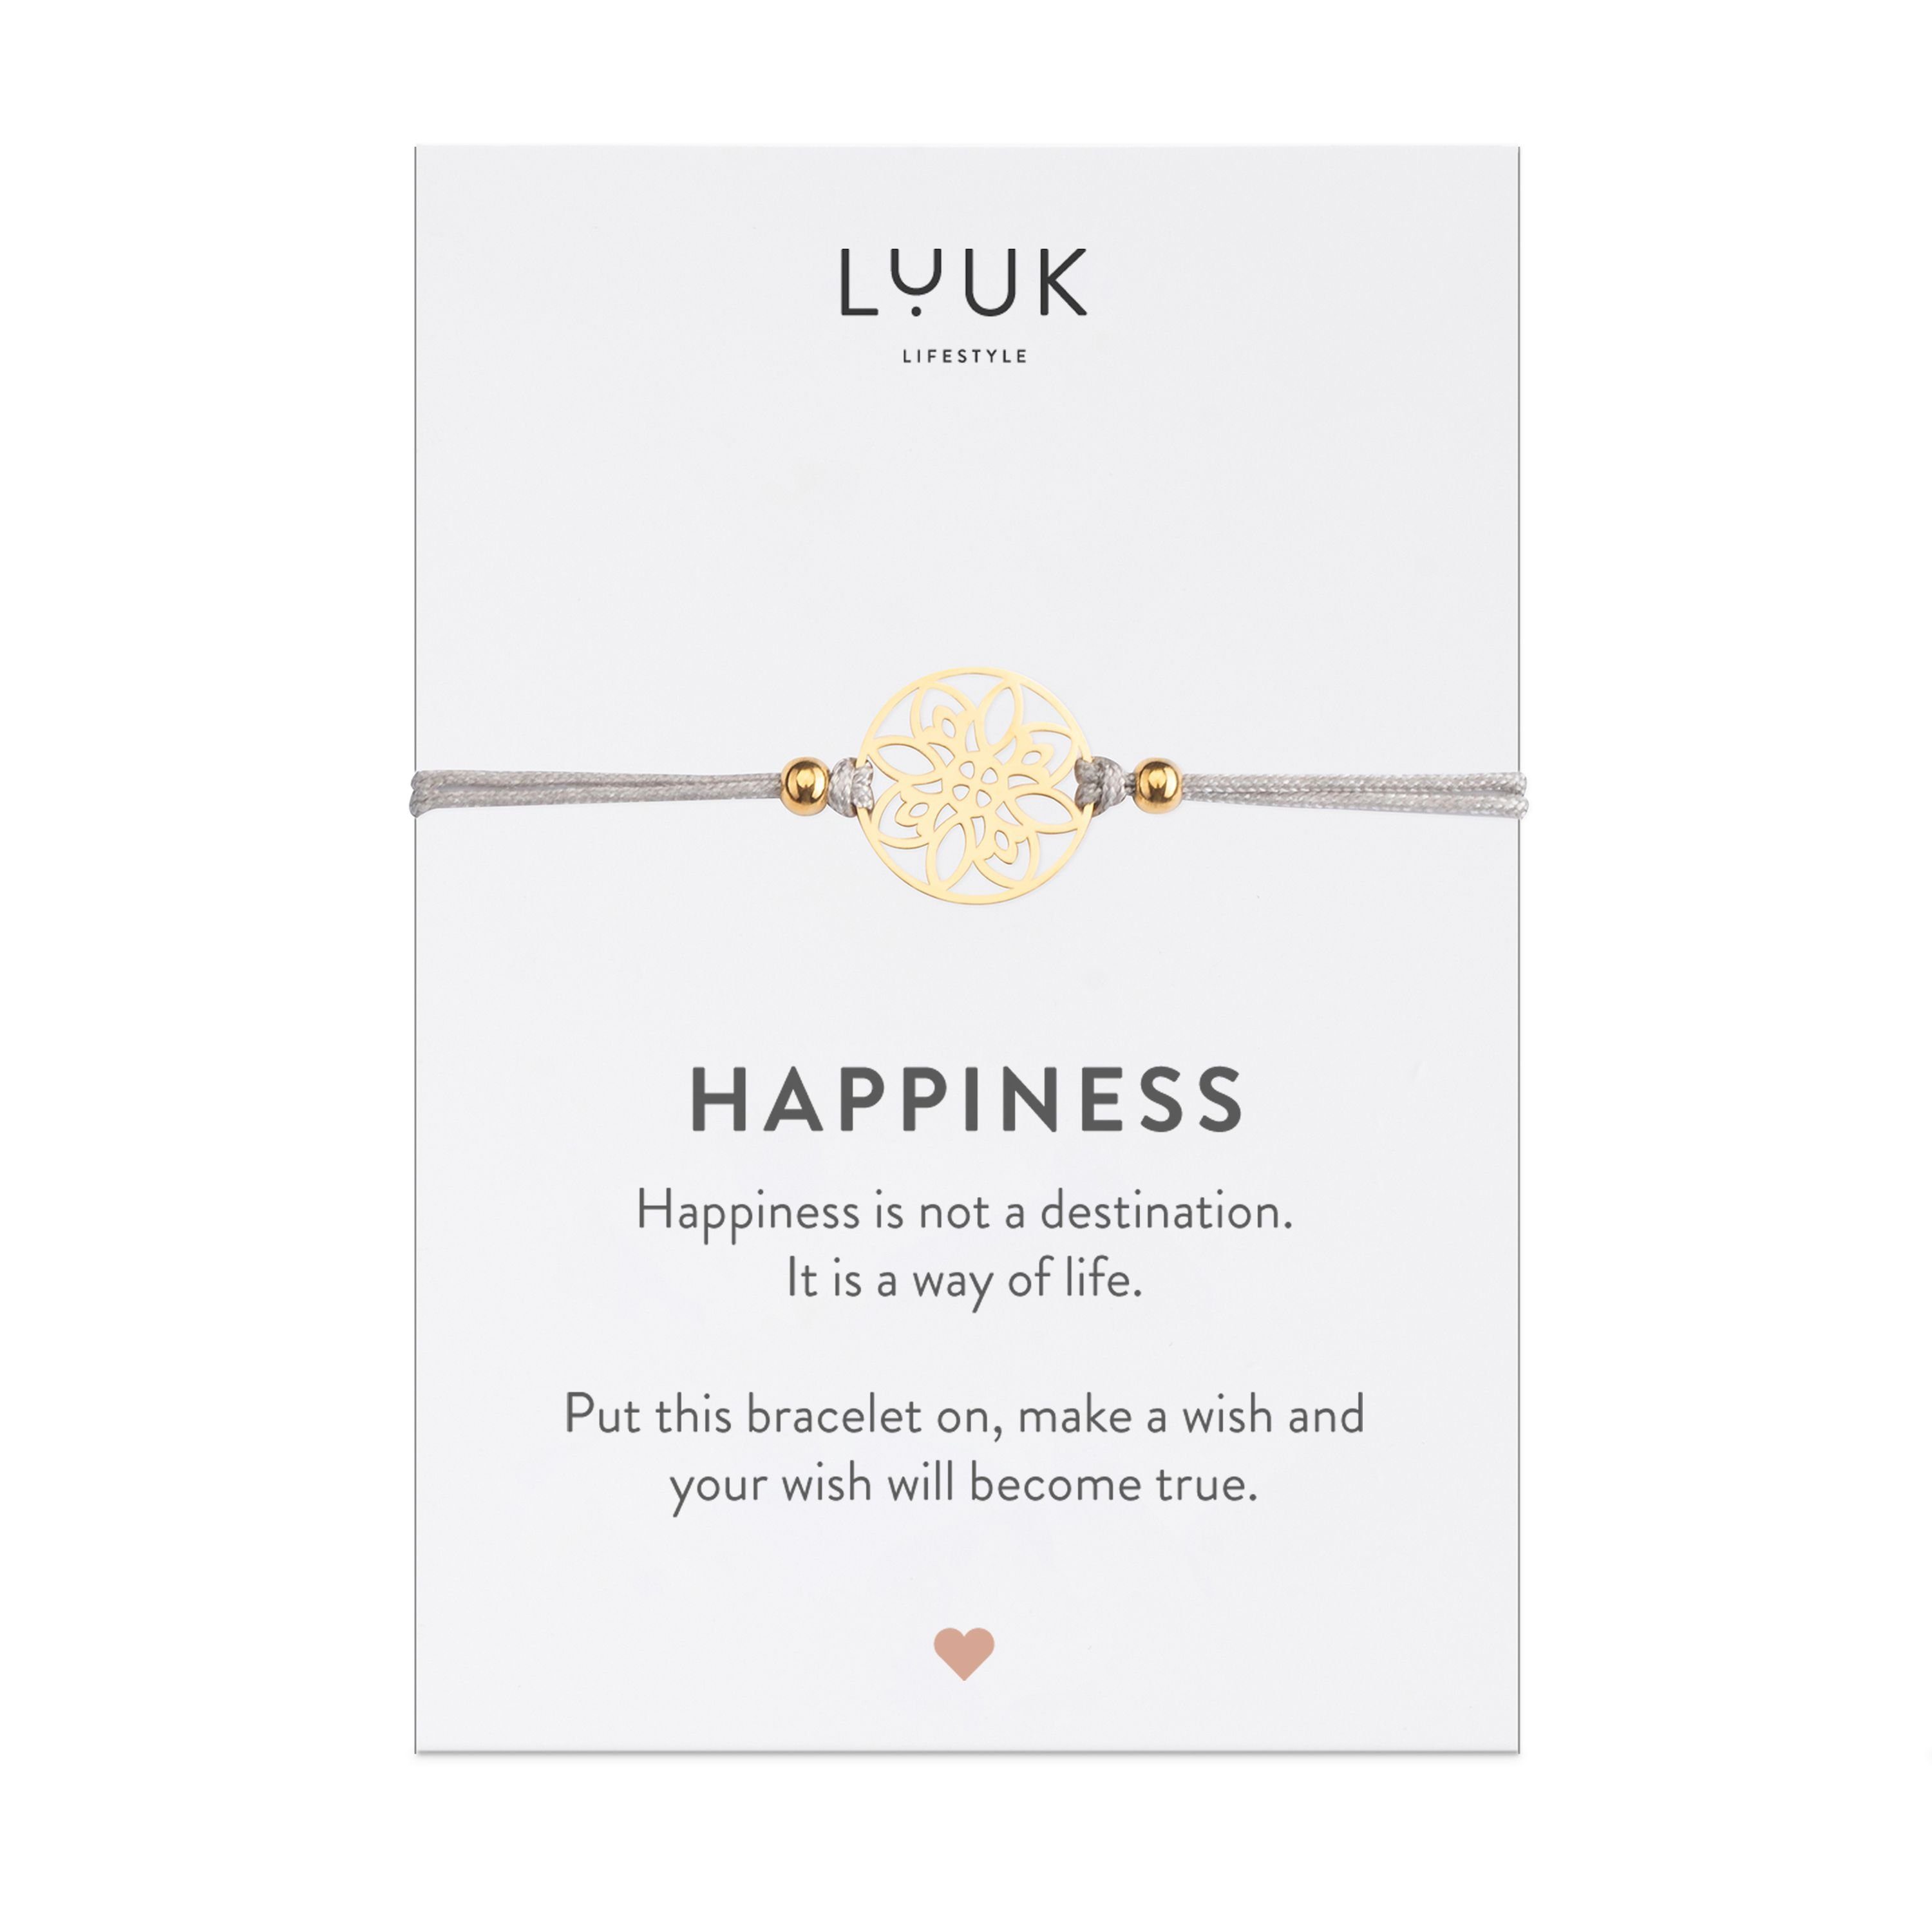 LUUK LIFESTYLE Freundschaftsarmband Blume, handmade, mit Happiness Spruchkarte Gold | Armbänder